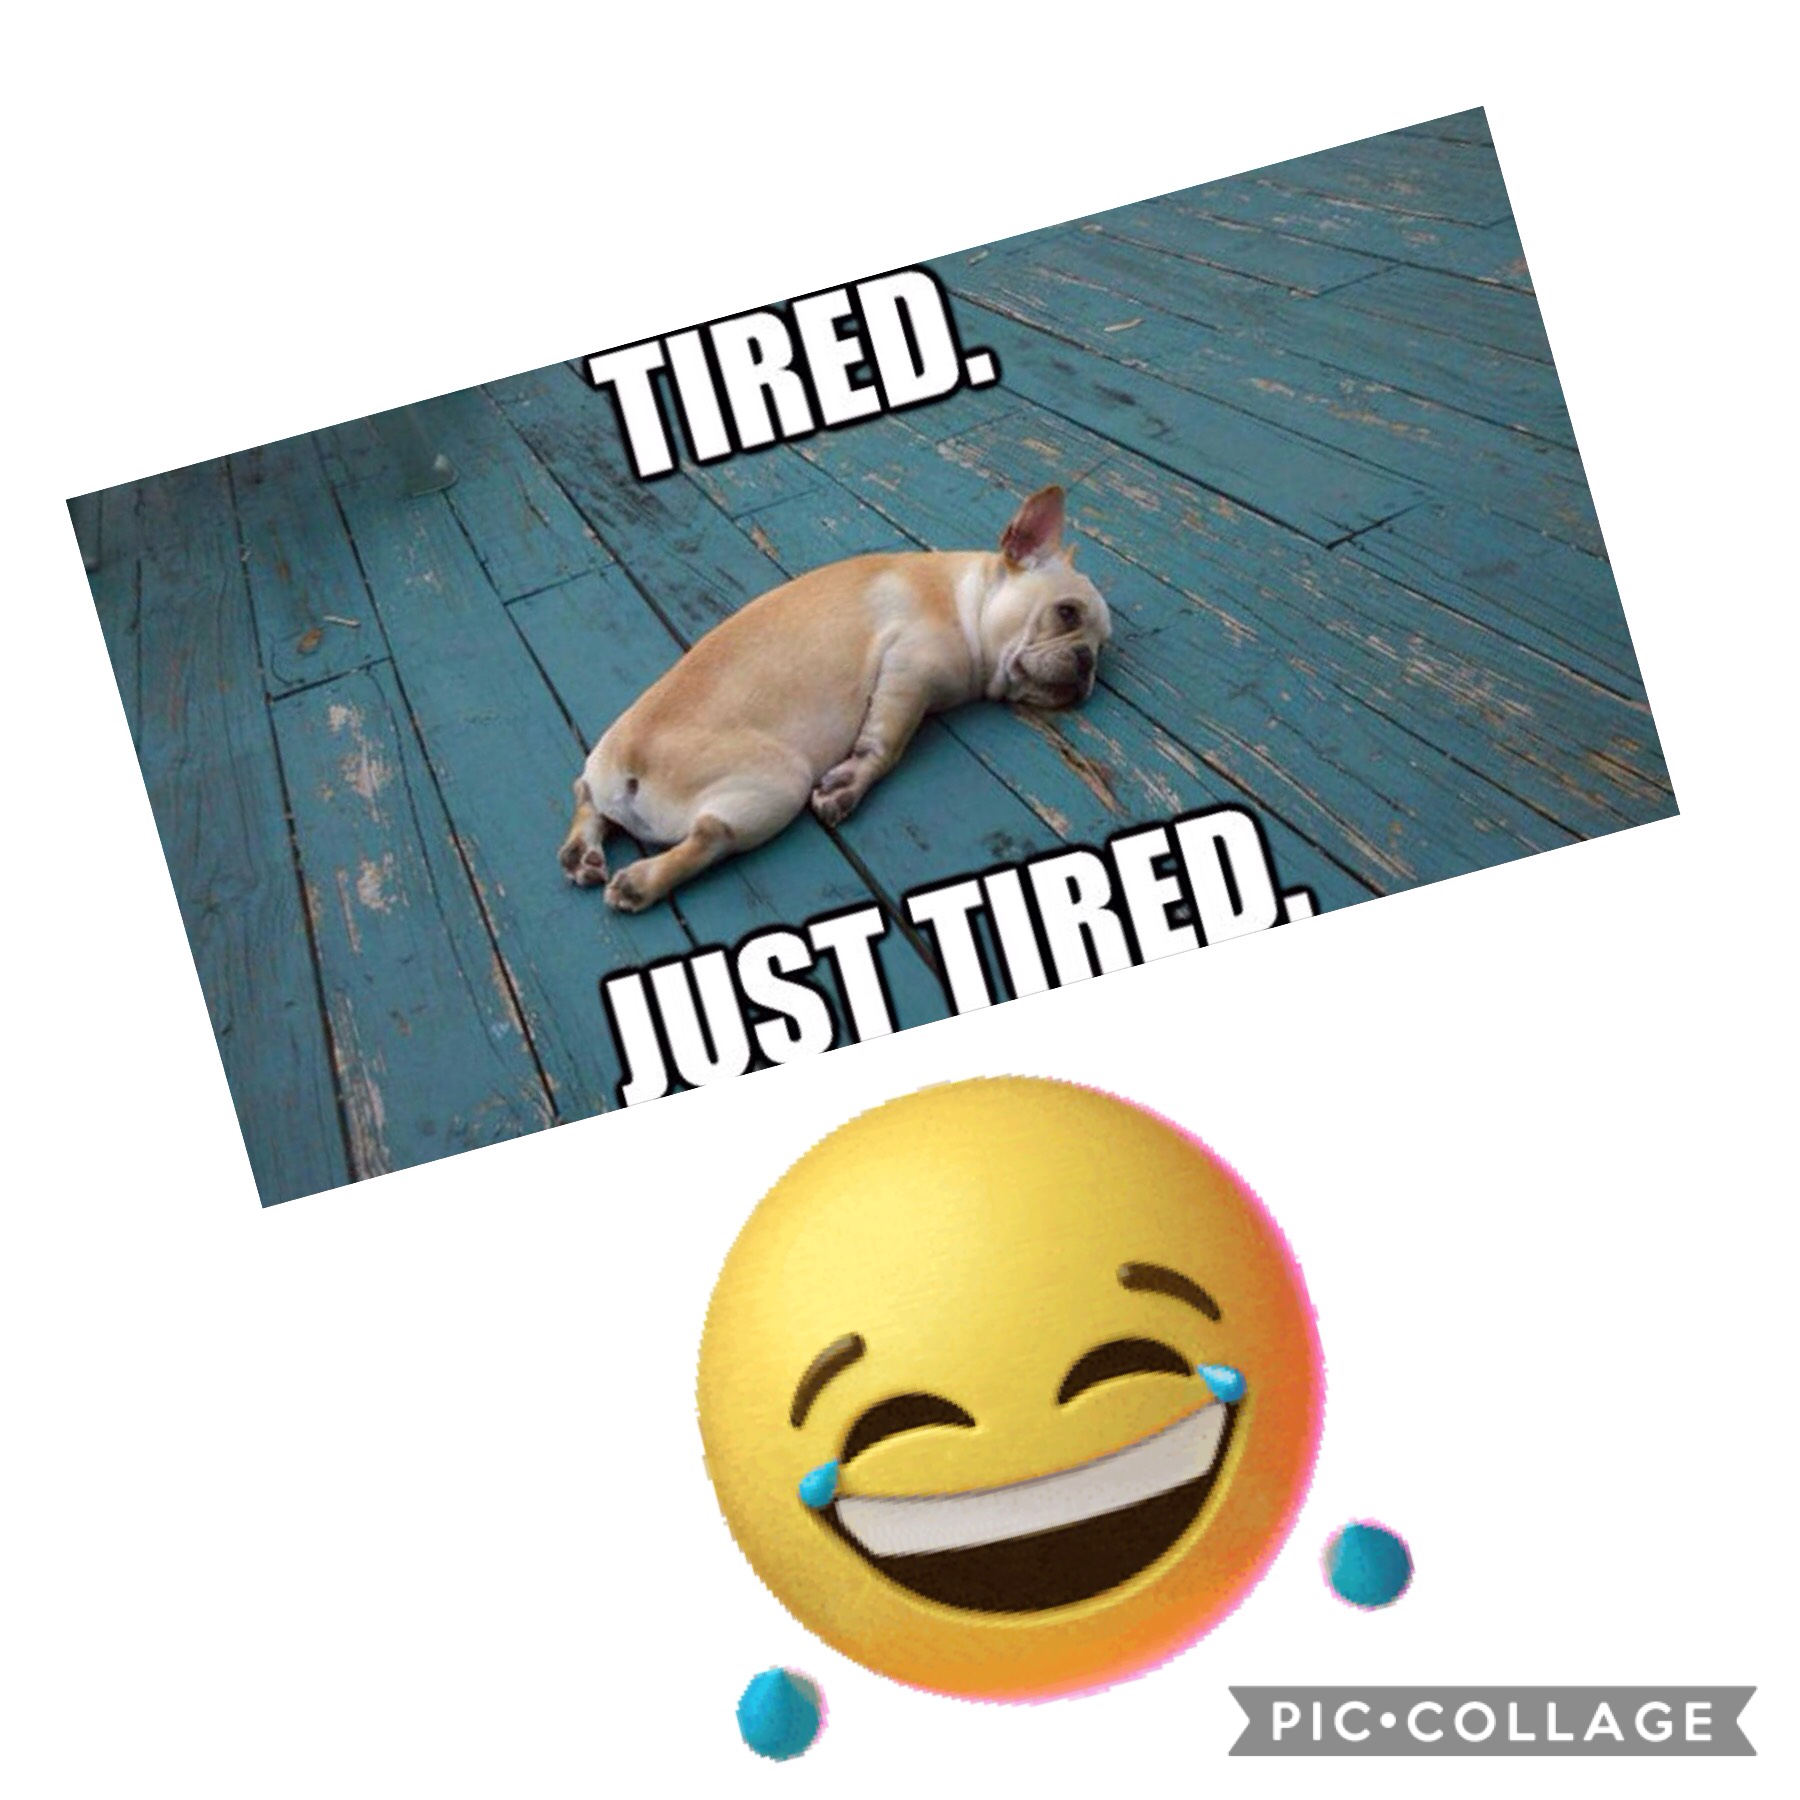 I'm tired